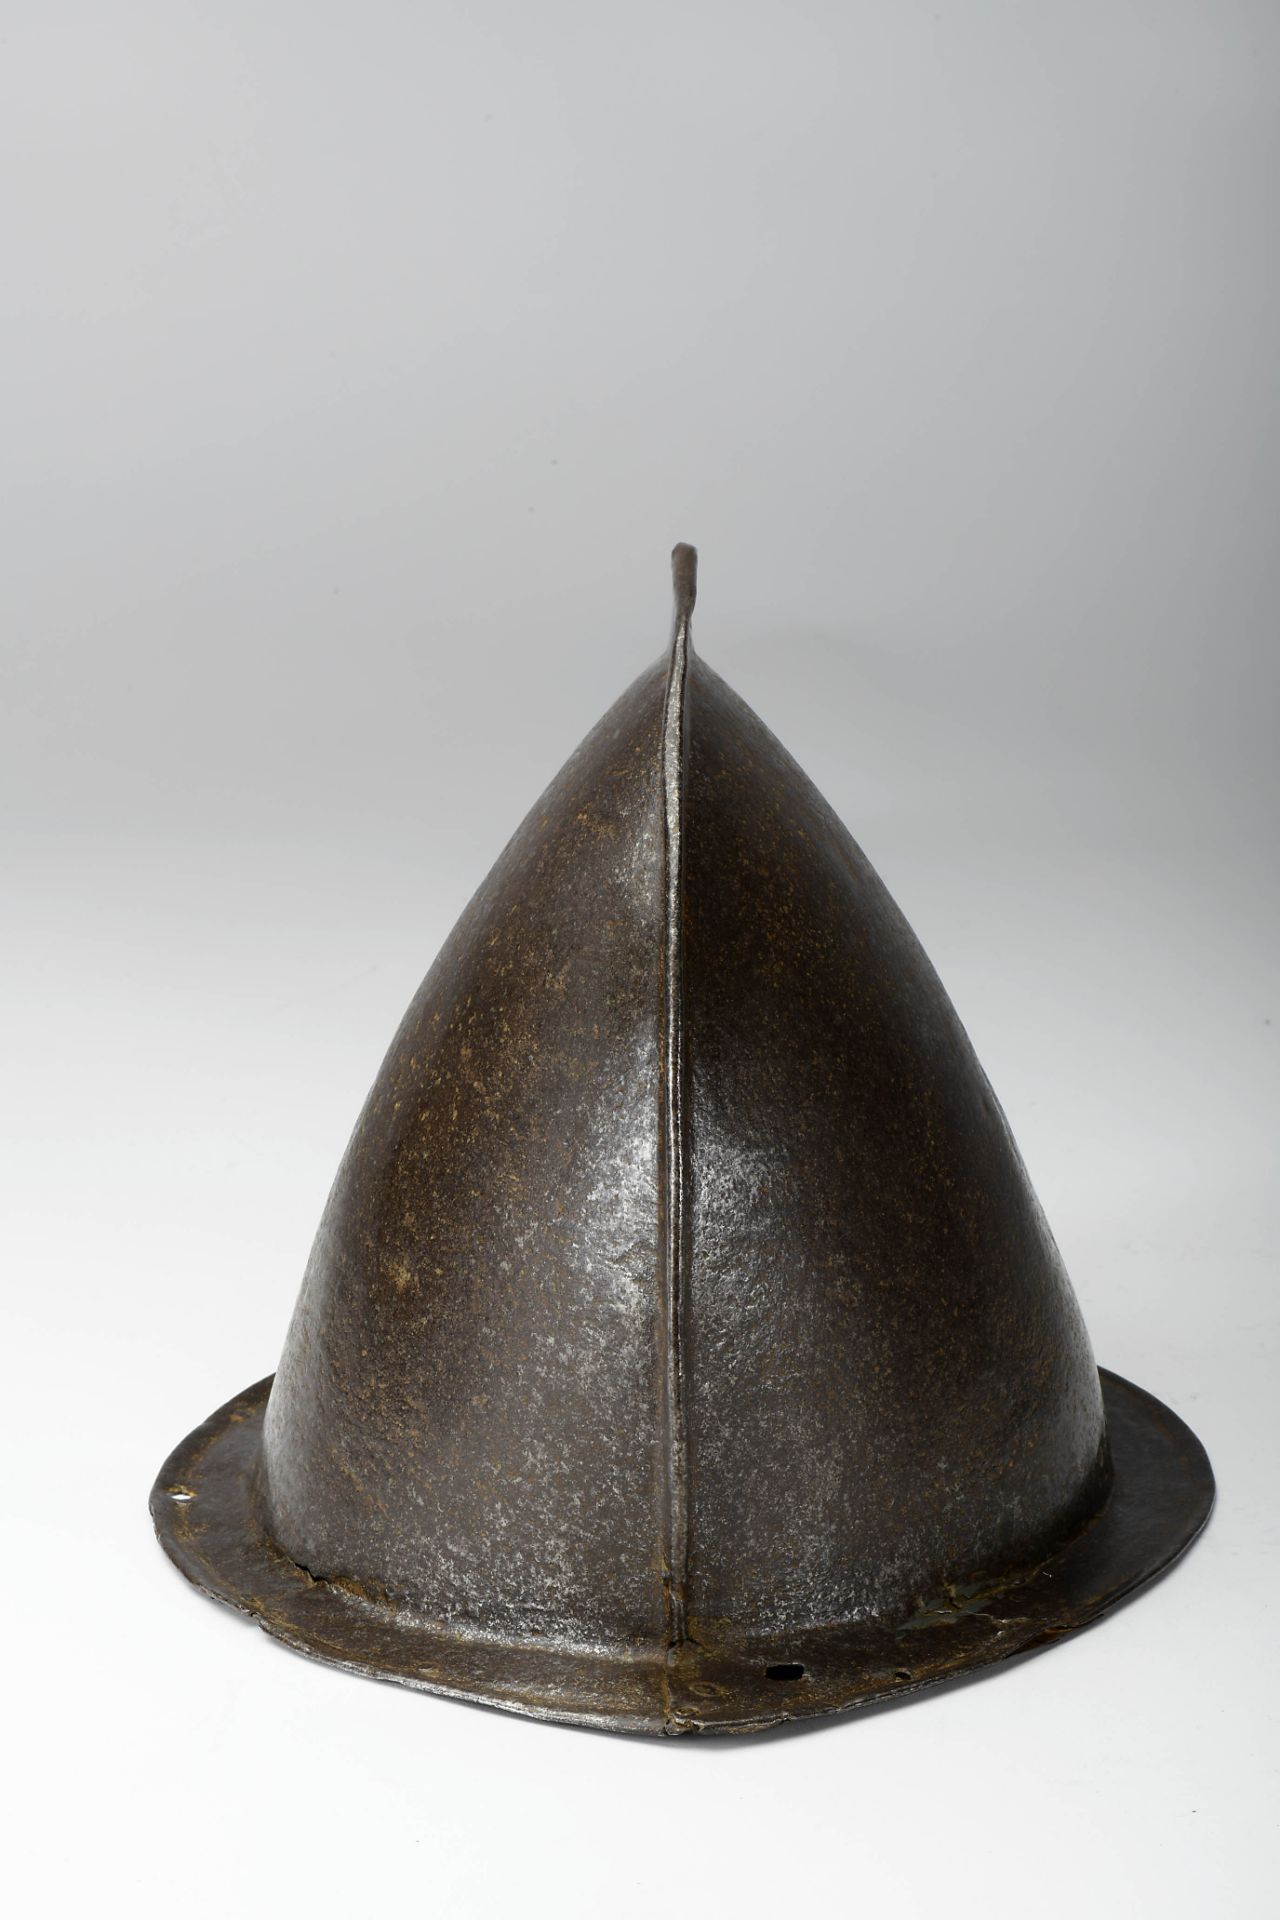 A morrion (military helmet) - Image 2 of 2